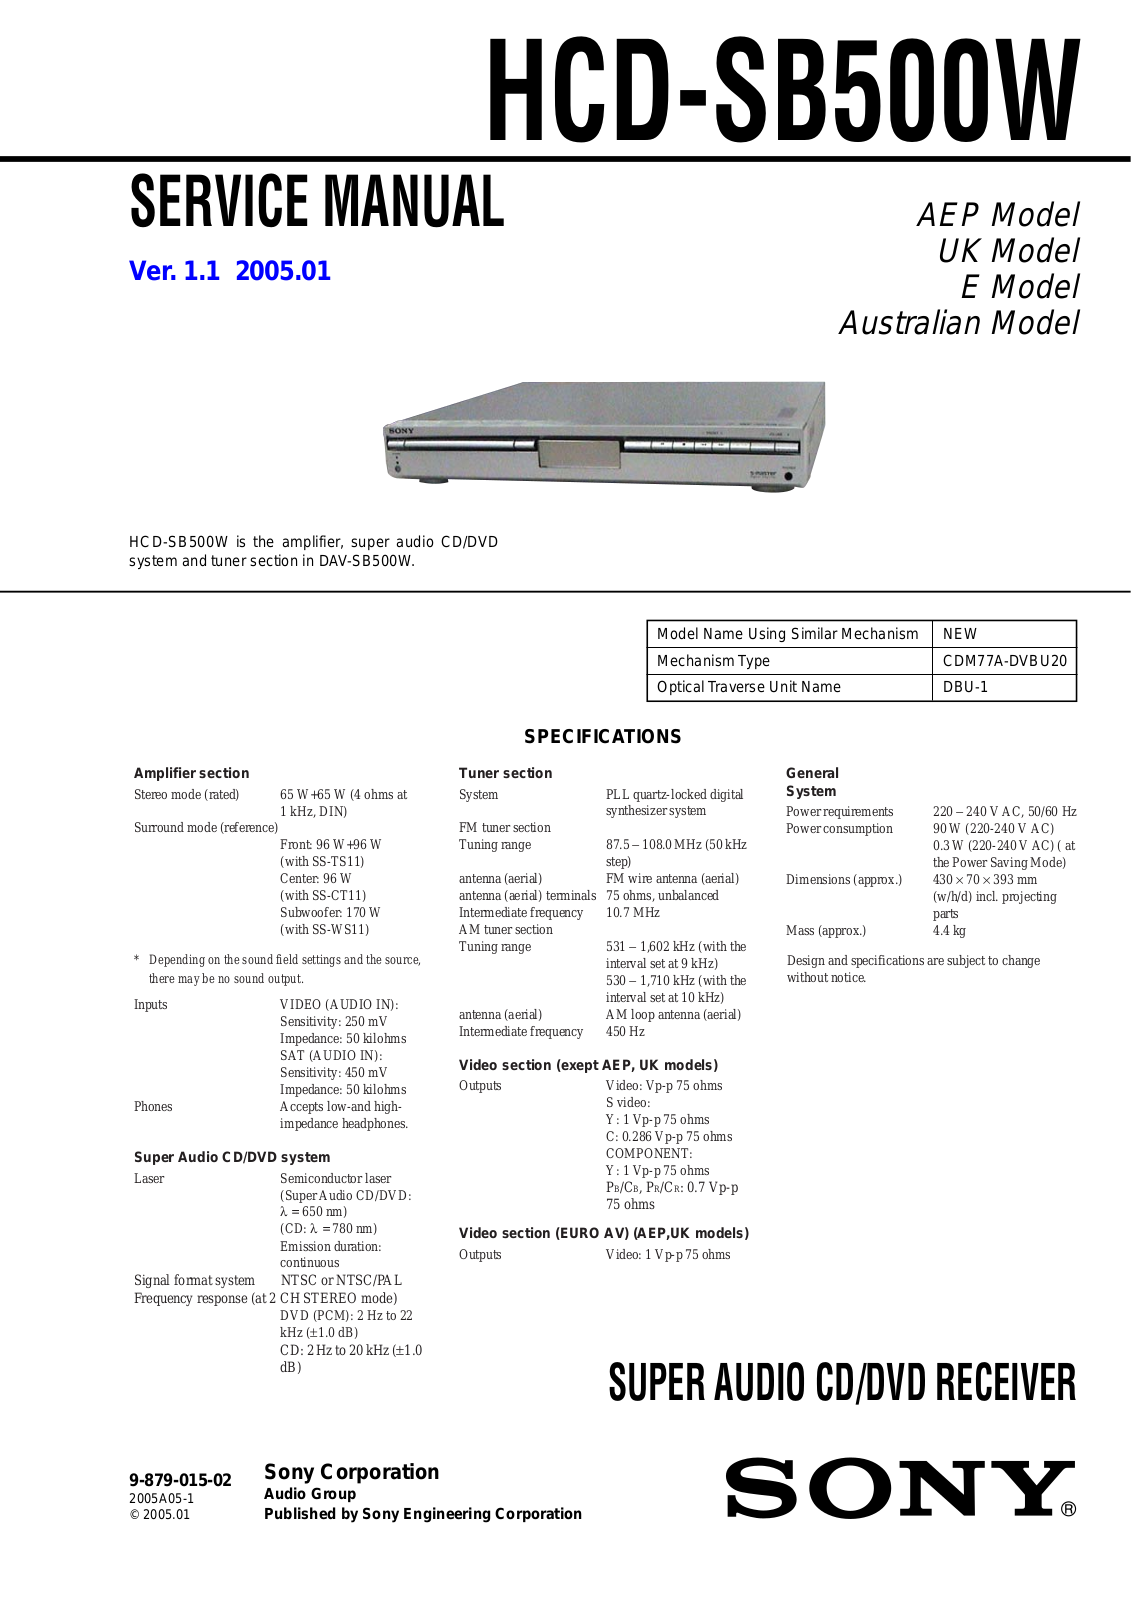 Sony HCD-SB500W Service Manual